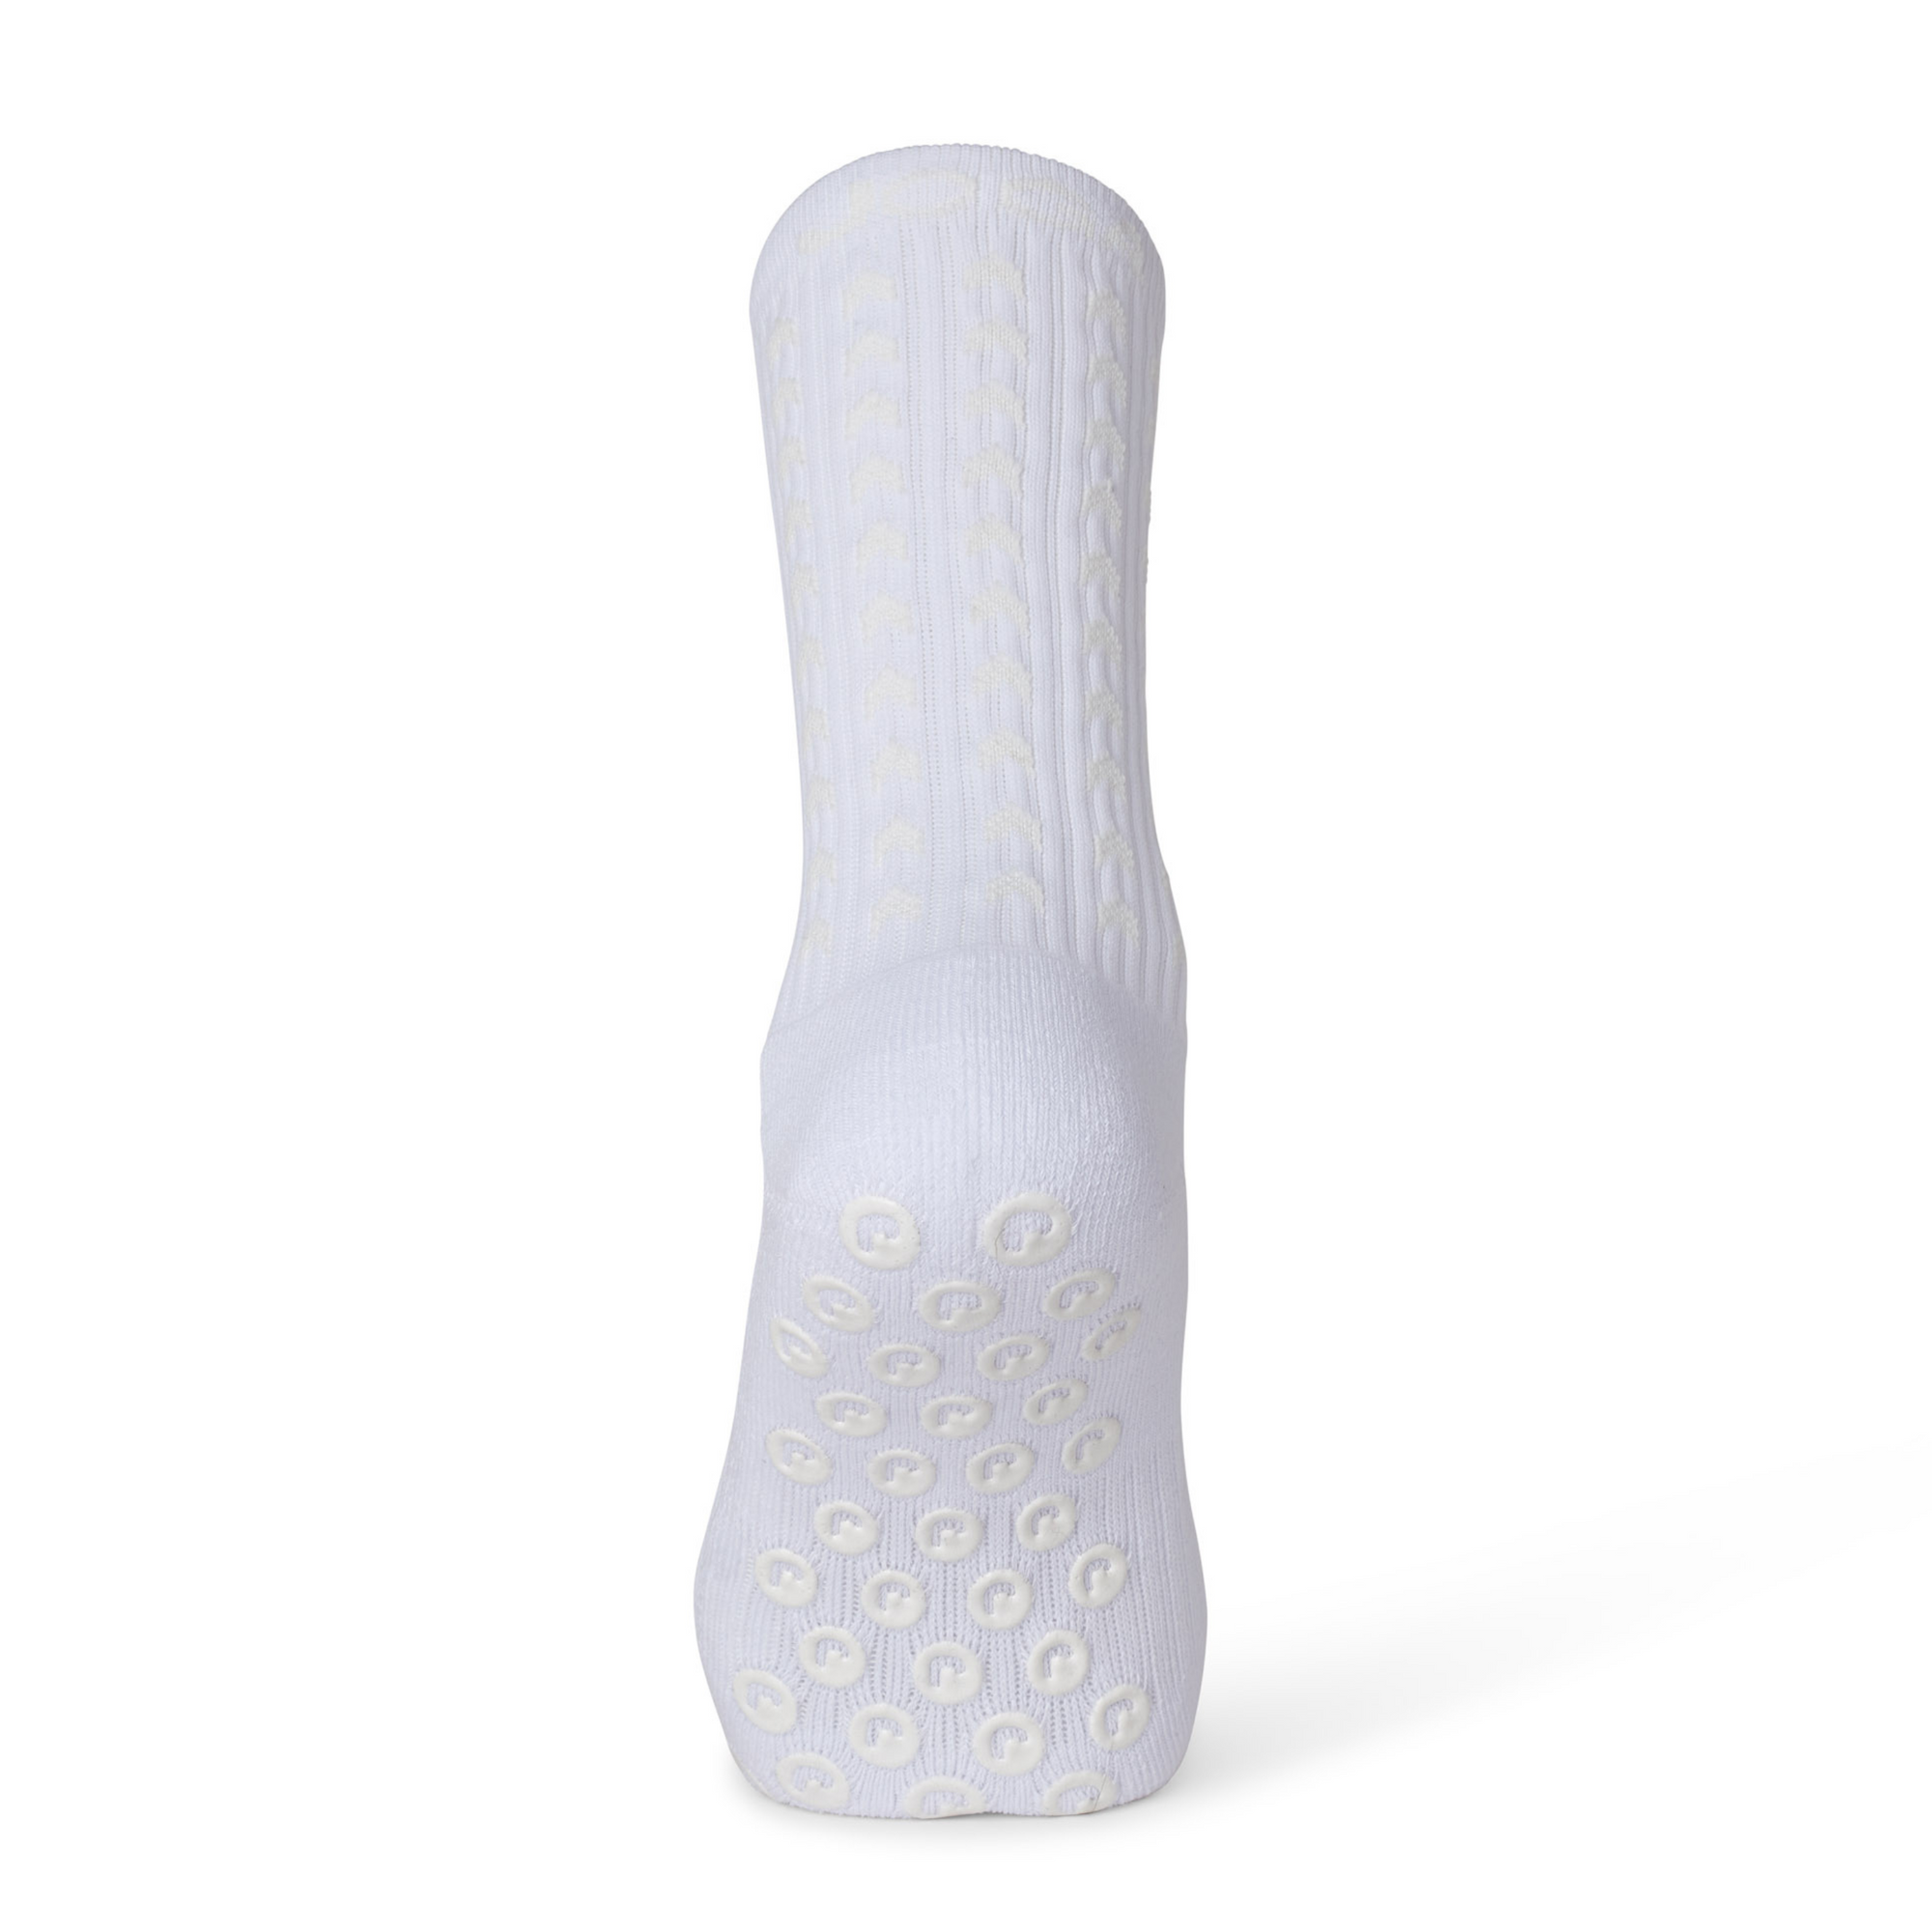 JOGA Performance Grip Socks 2.0 - Whiteout